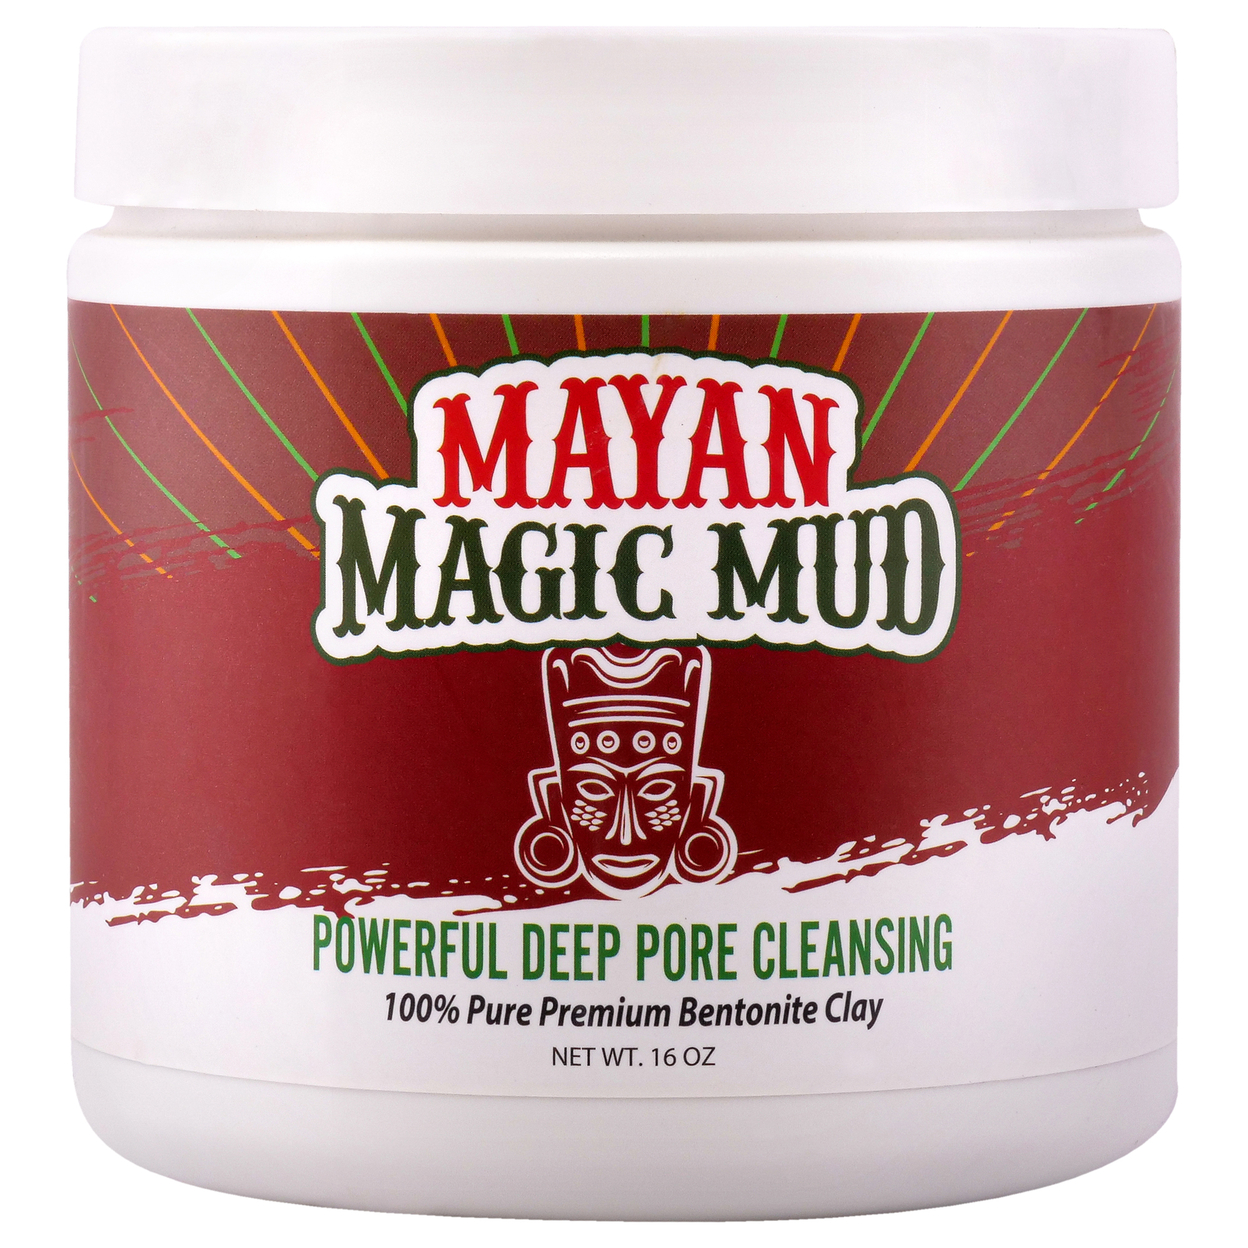 Mayan Magic Mud Powerful Deep Pore Cleansing White Kaolin Clay Cleanser 16 Oz